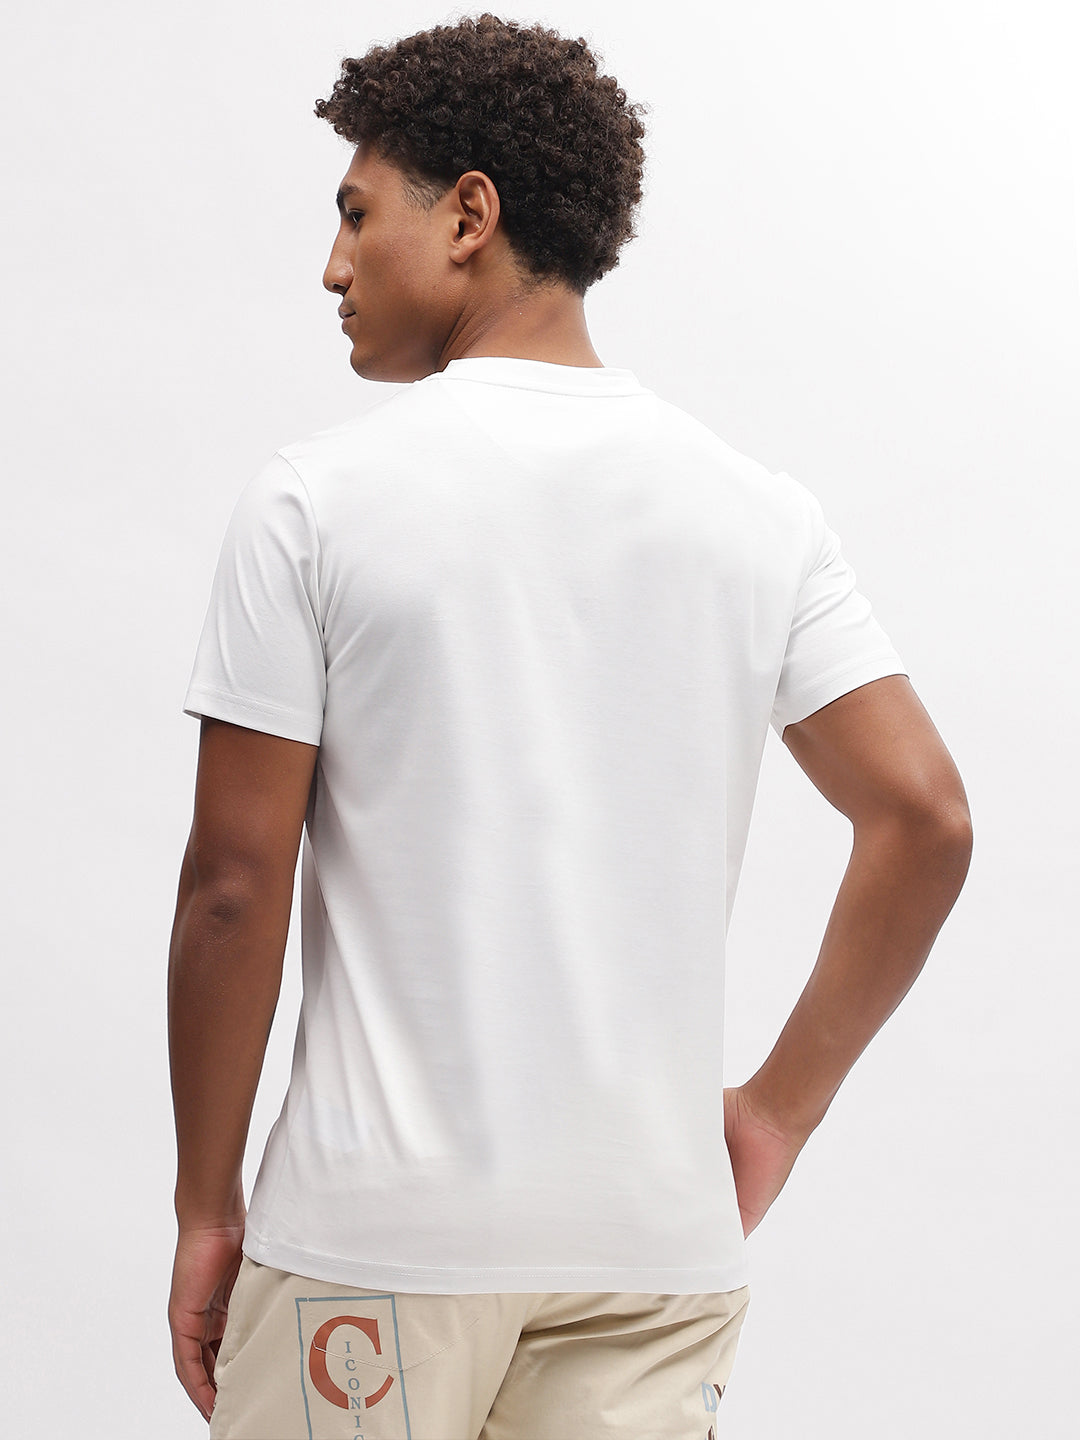 Iconic Men White Printed Round Neck Short Sleeves T-Shirt